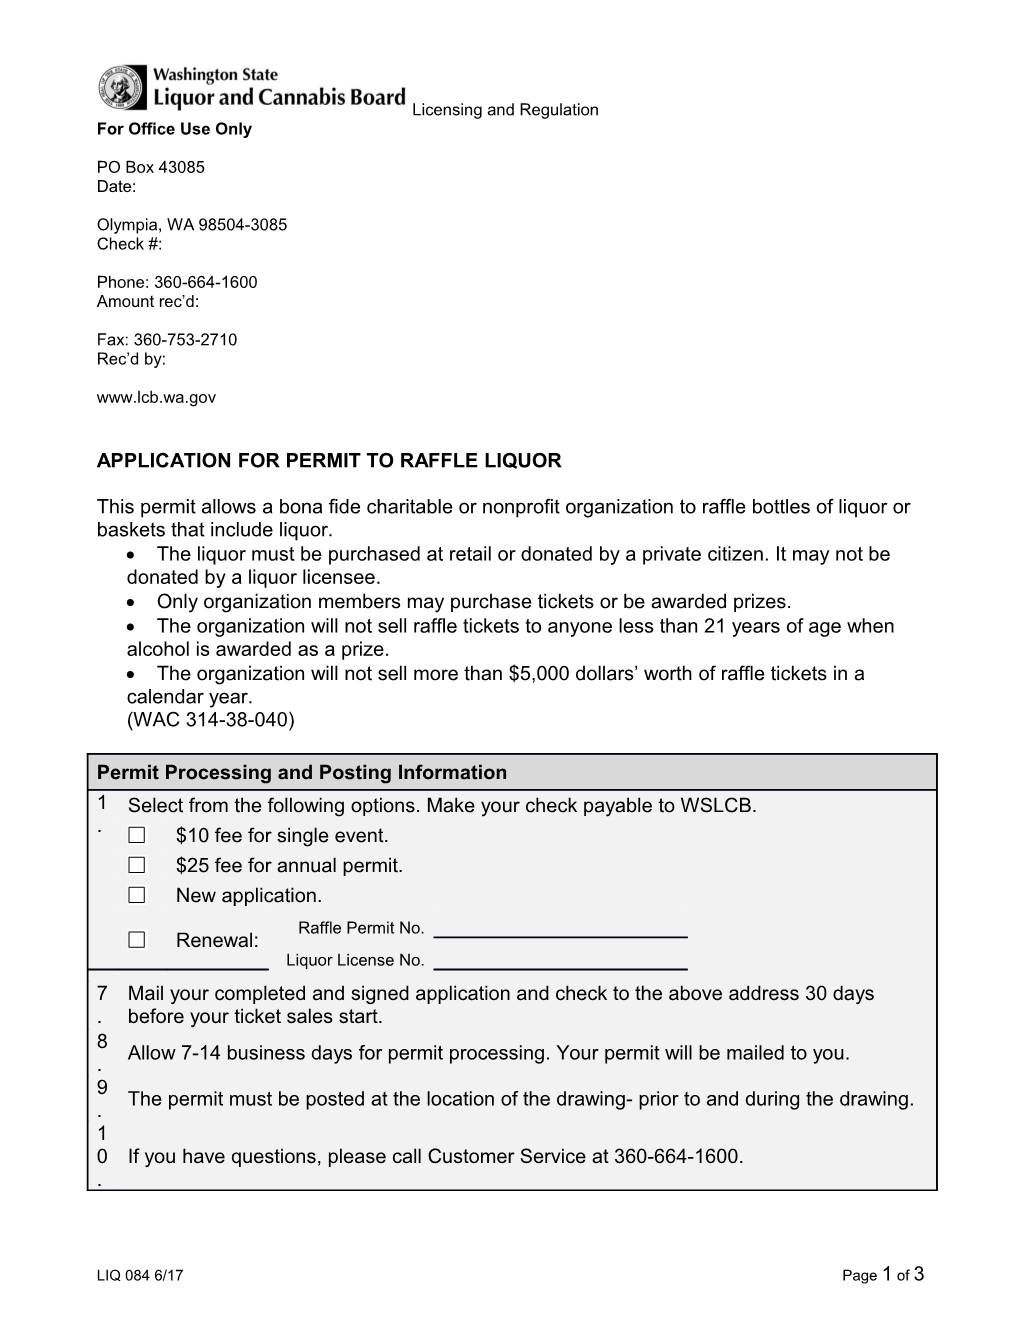 Application Form for Permit to Raffle Liquor